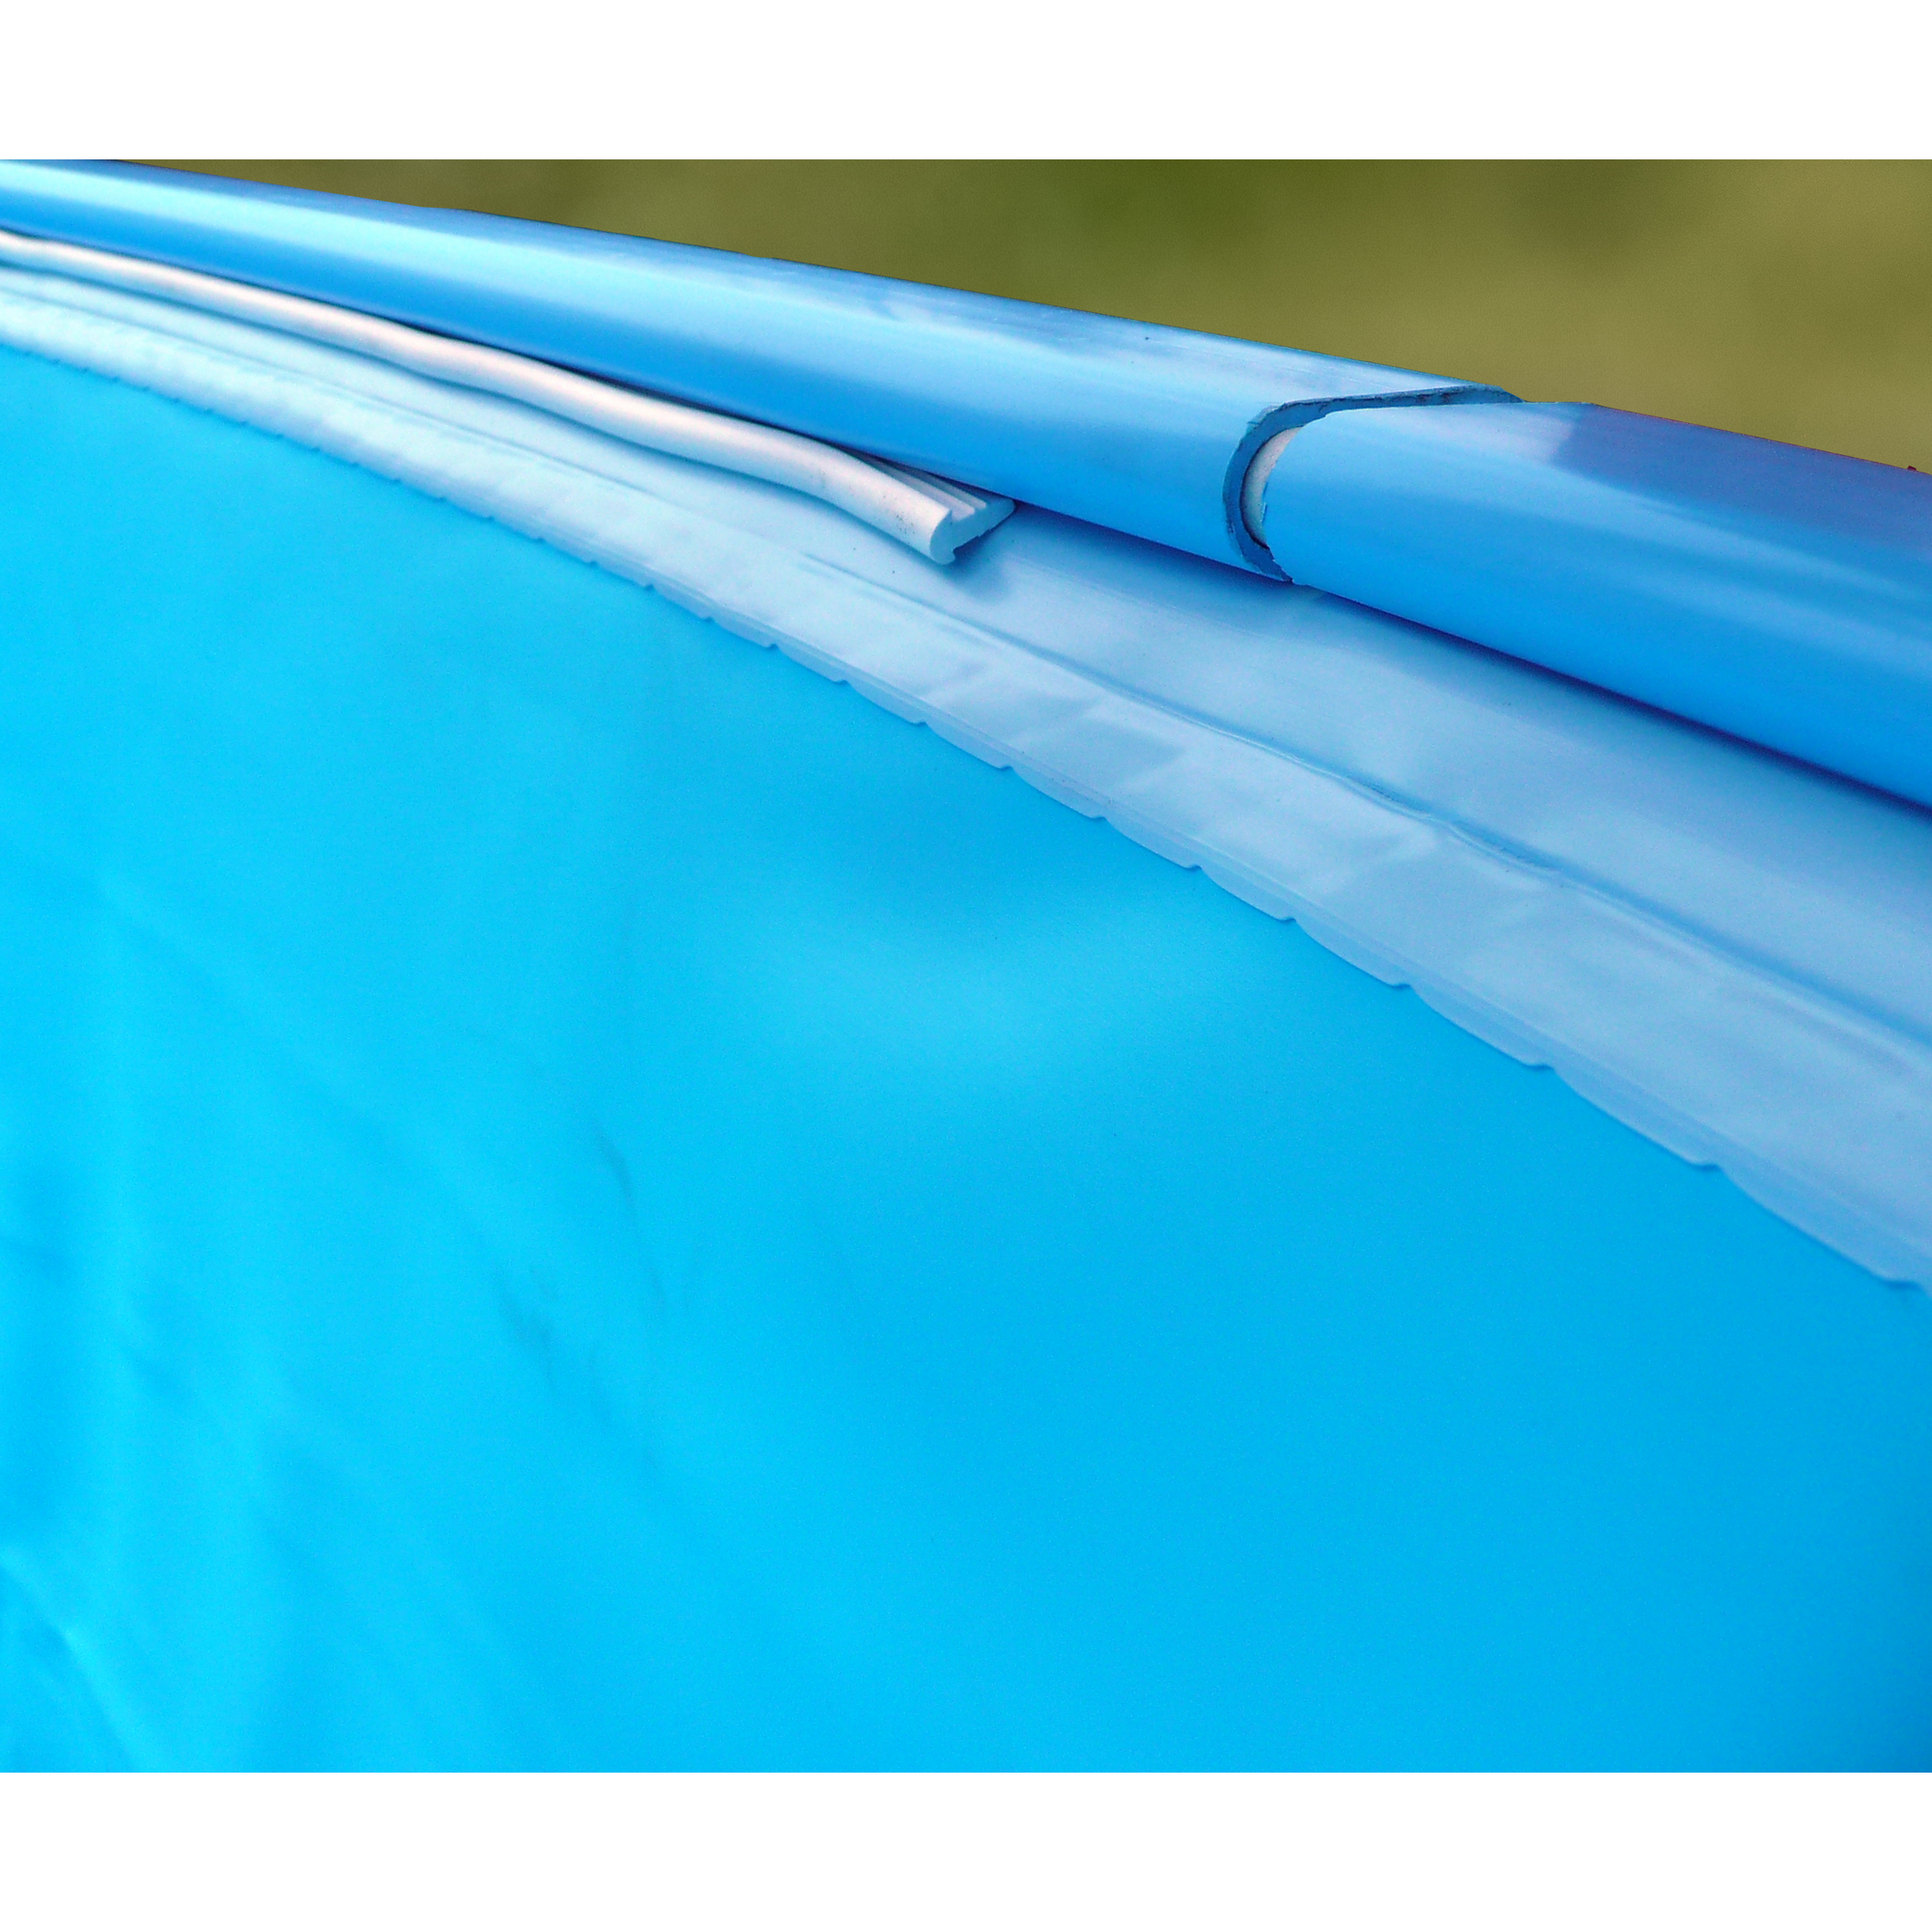 Einbaupool-Set 'Holly' blau/weiß oval 700 x 320 x 150 cm + product picture